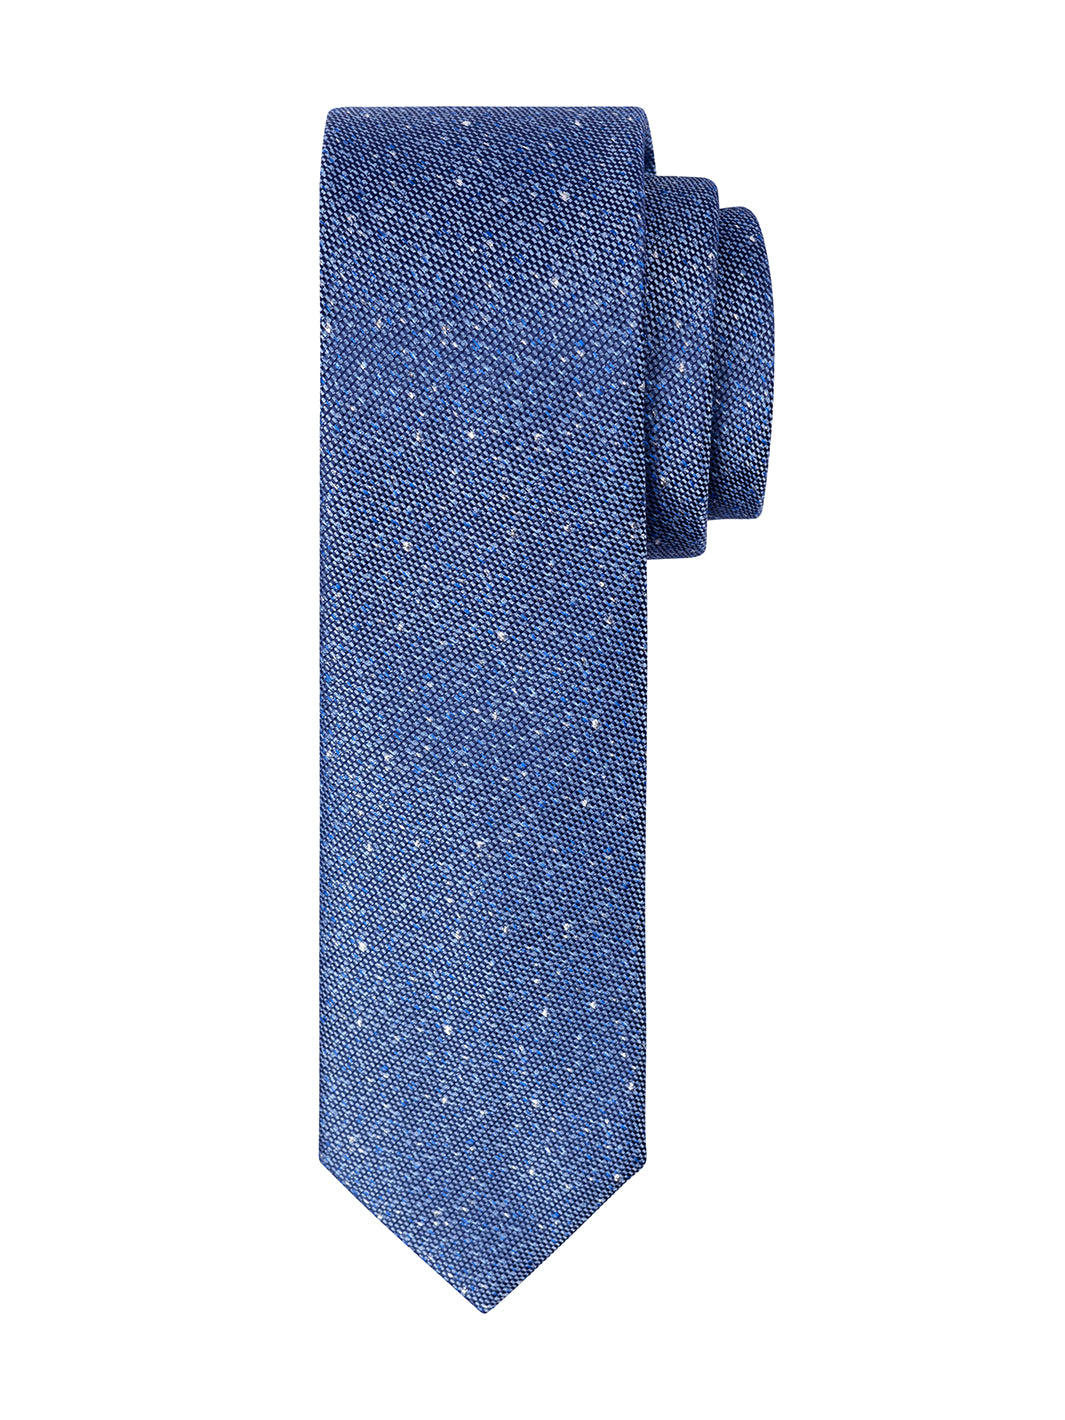 Blue Speckle Tie